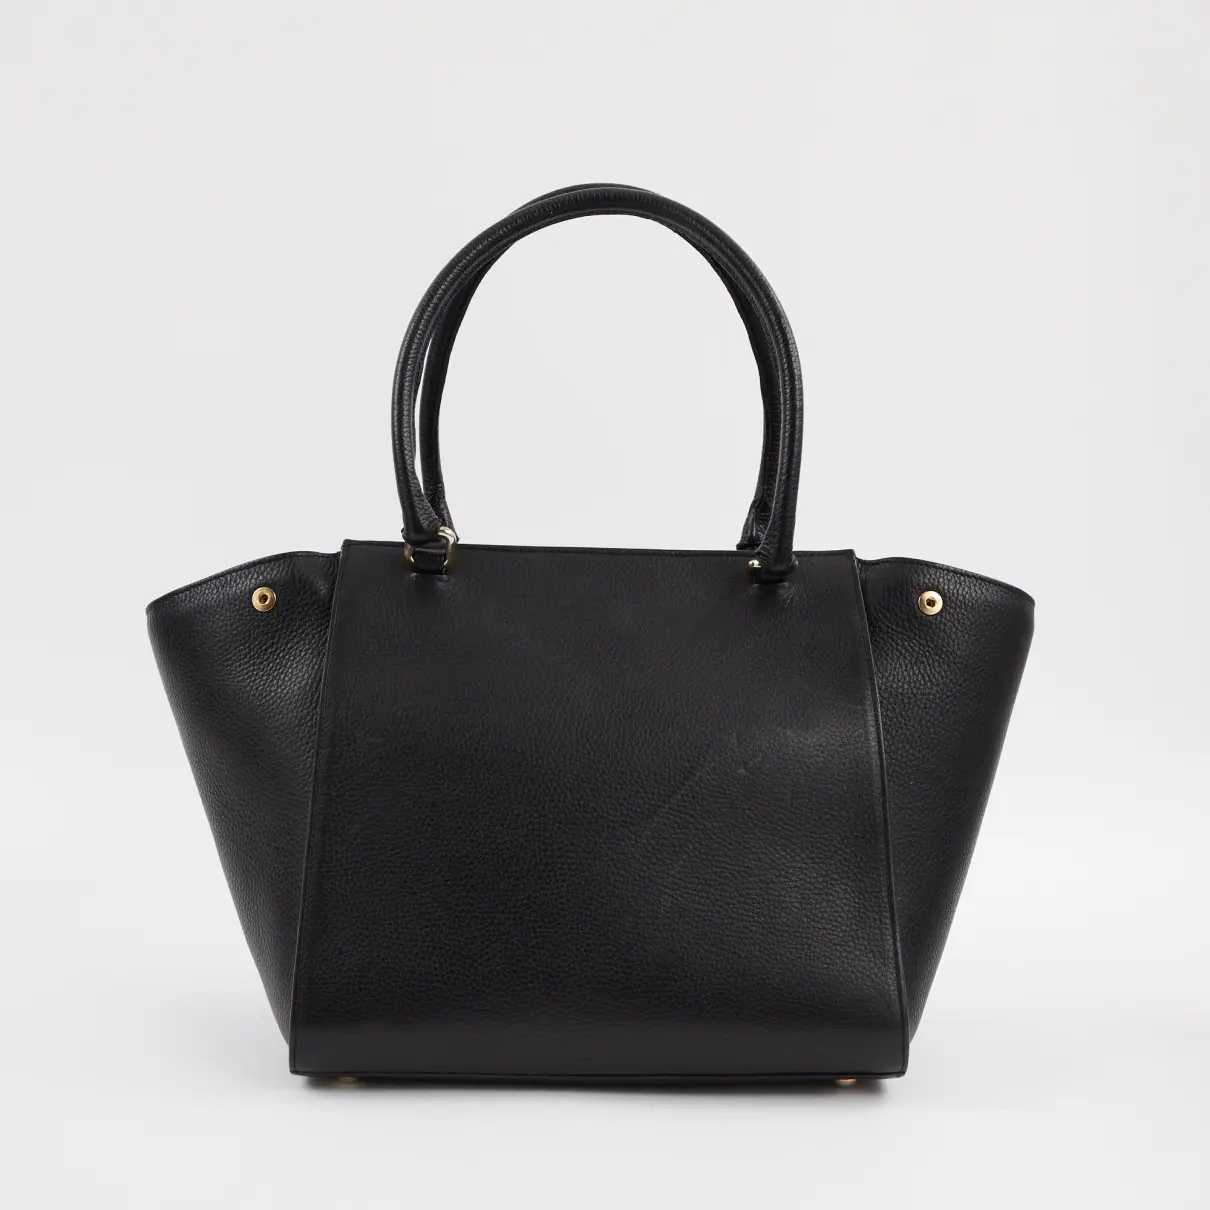 Buy Milli Millu Leather handbag online